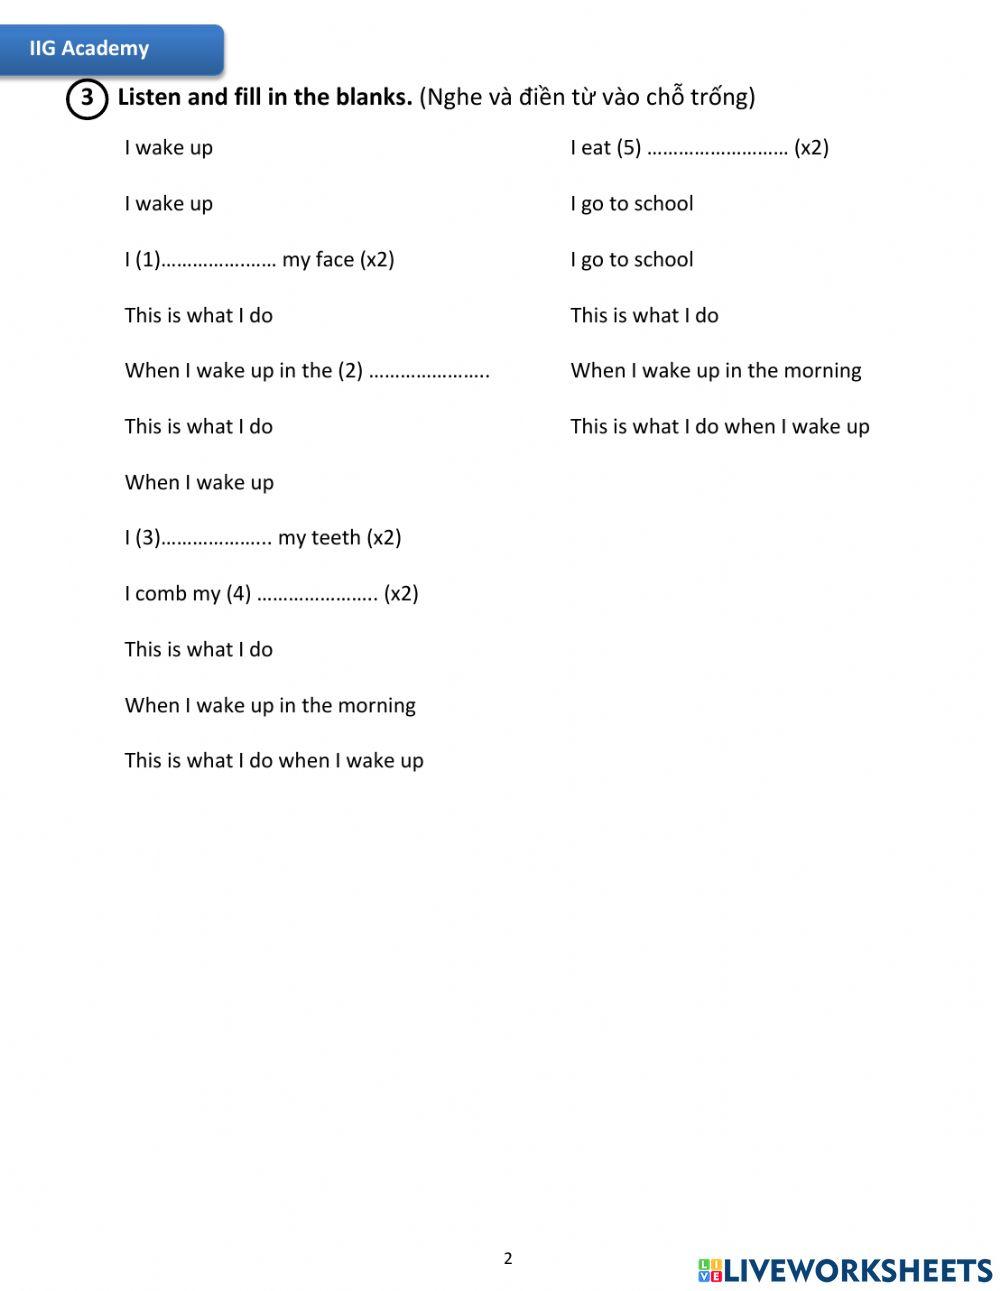 IIG-Grade 5-Worksheet 4